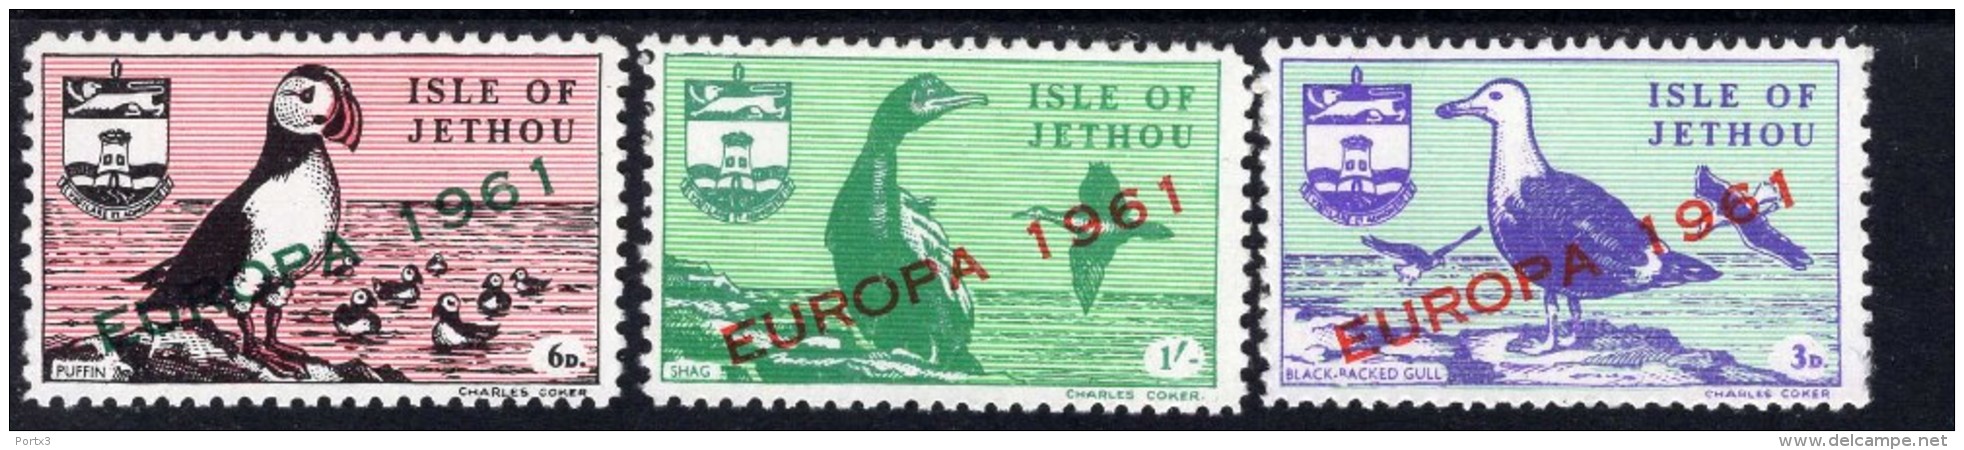 Isle Of Jethou  CEPT ** MNH Postfrisch Neuf - Non Classés